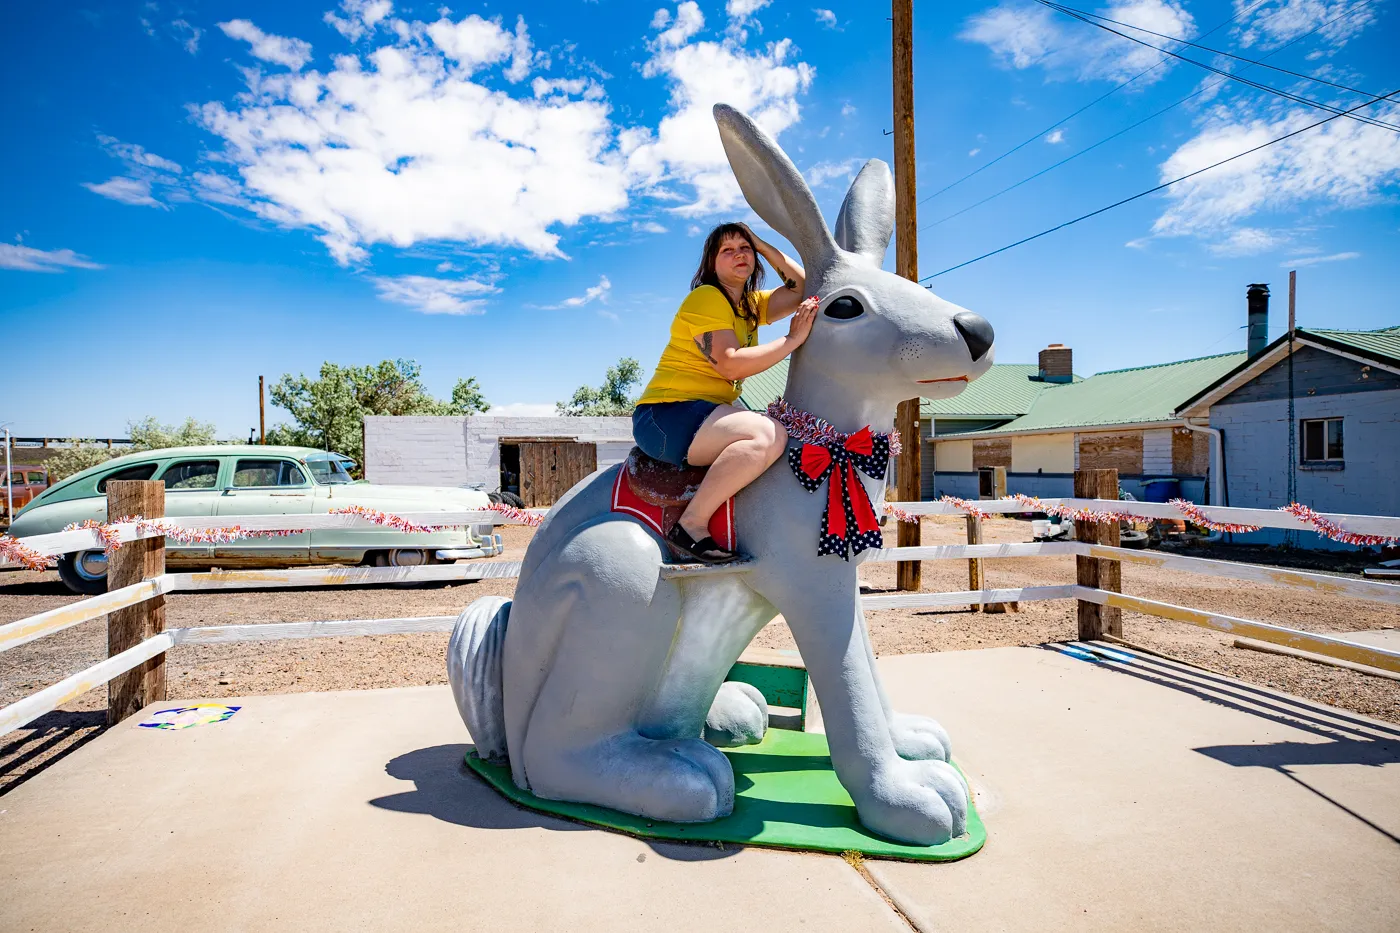 Jack Rabbit Trading Post in Joseph City, Arizona - Route 66 Roadside Attraction